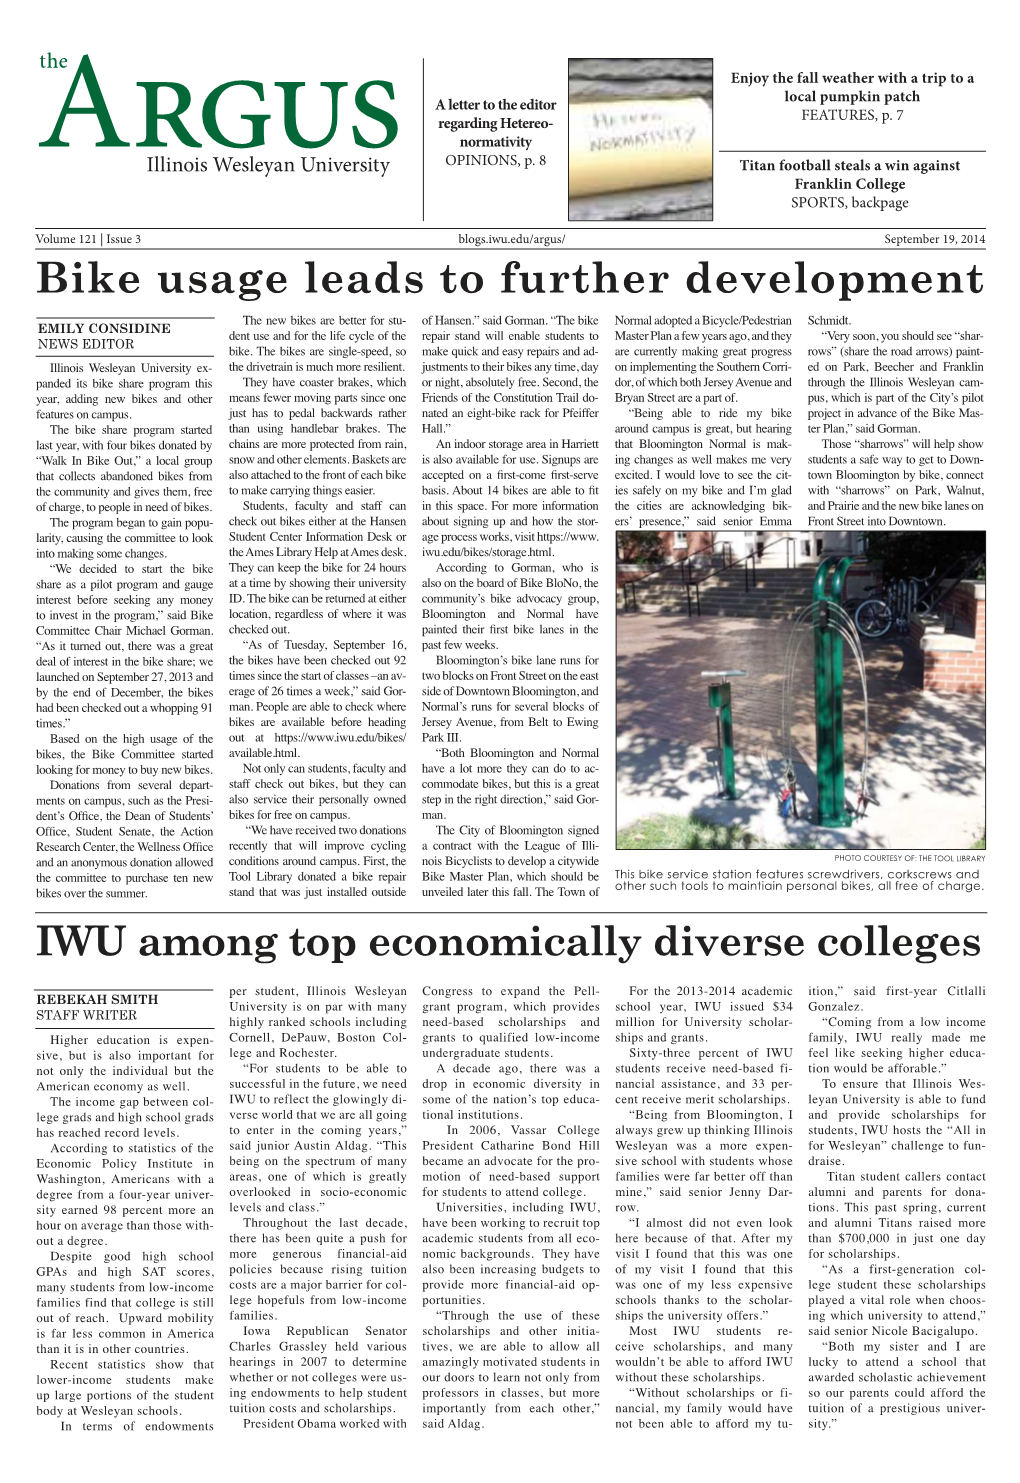 Bike Usage Leads to Further Development